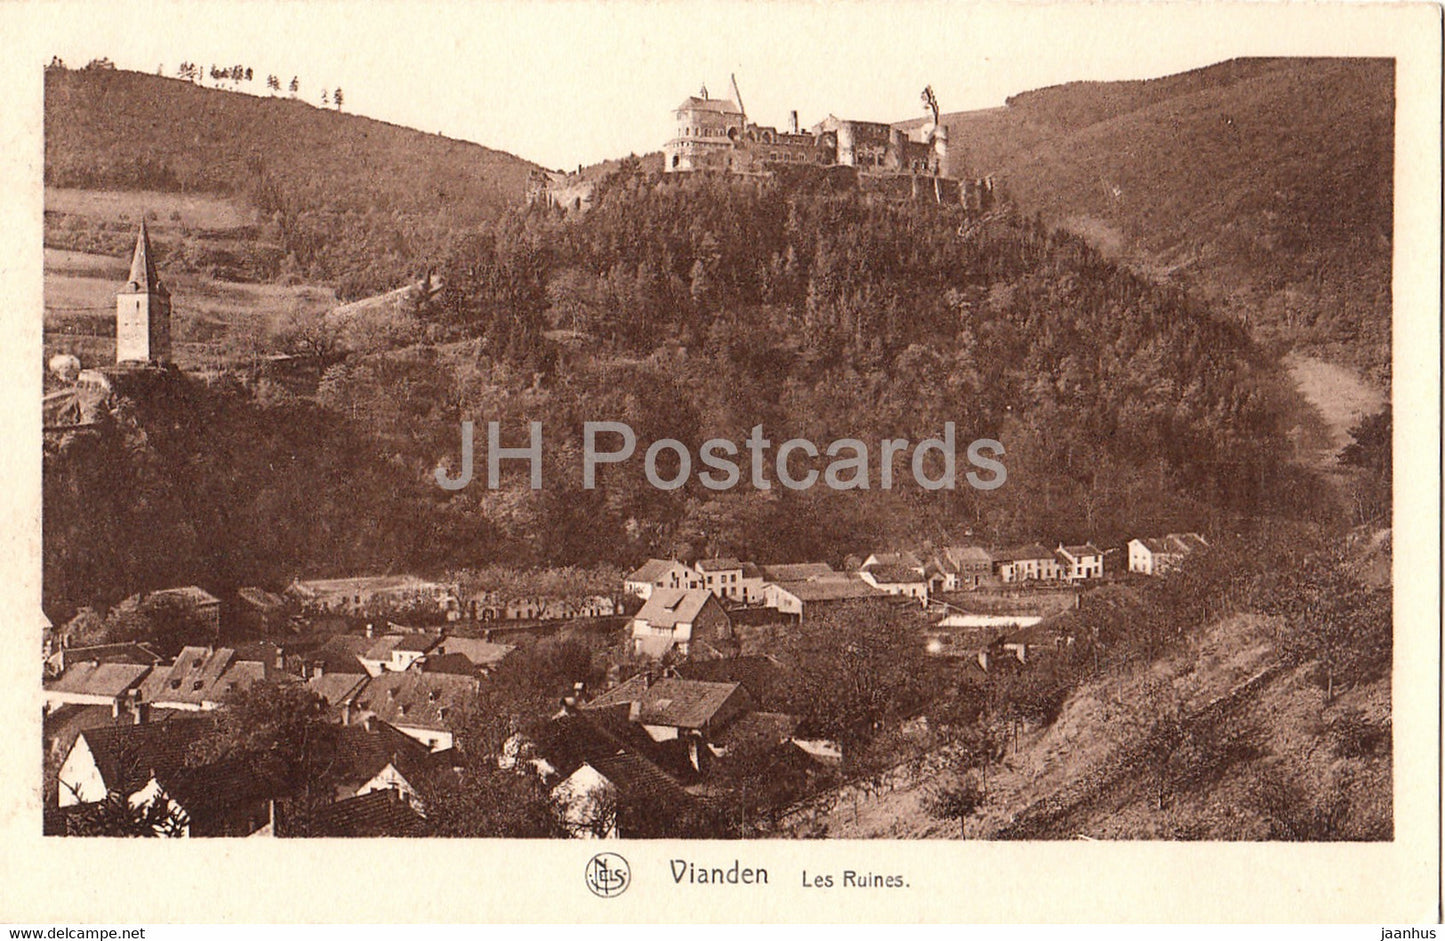 Vianden - Les Ruines - 28 - serie 6 - old postcard - Luxembourg - unused - JH Postcards